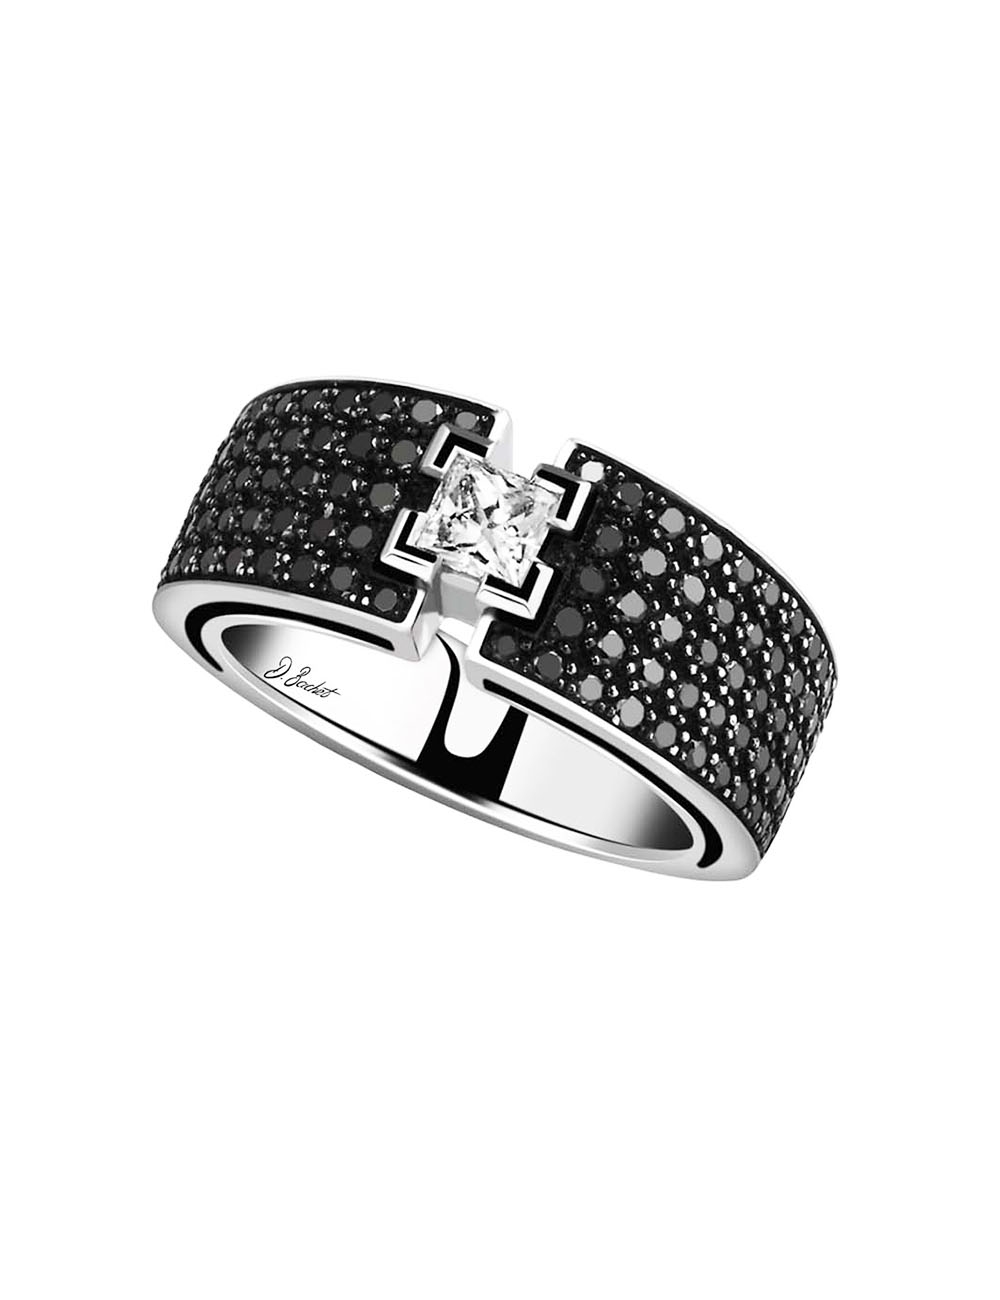 Luxury women's ring: 0.60 ct princess white diamond, surrounded by black diamonds.